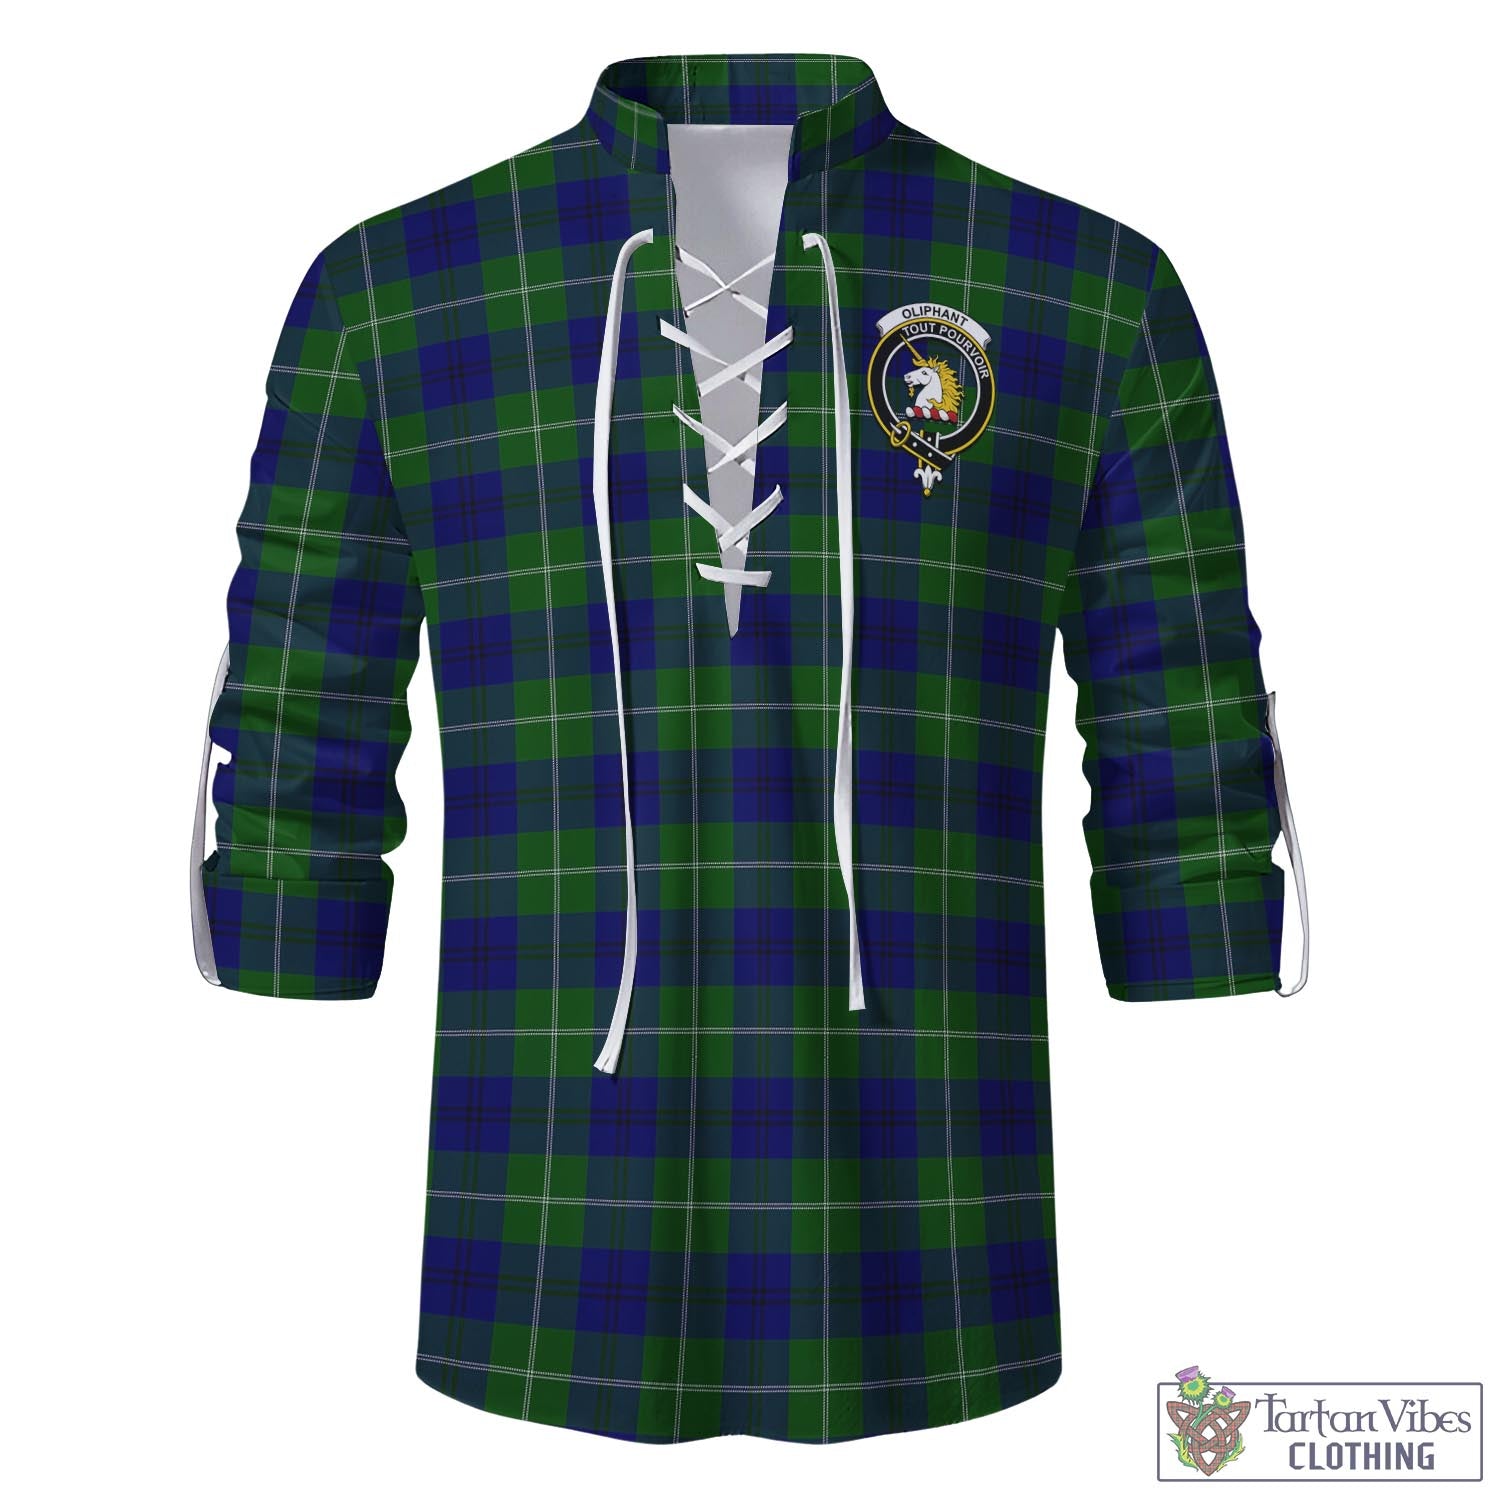 Tartan Vibes Clothing Oliphant Modern Tartan Men's Scottish Traditional Jacobite Ghillie Kilt Shirt with Family Crest